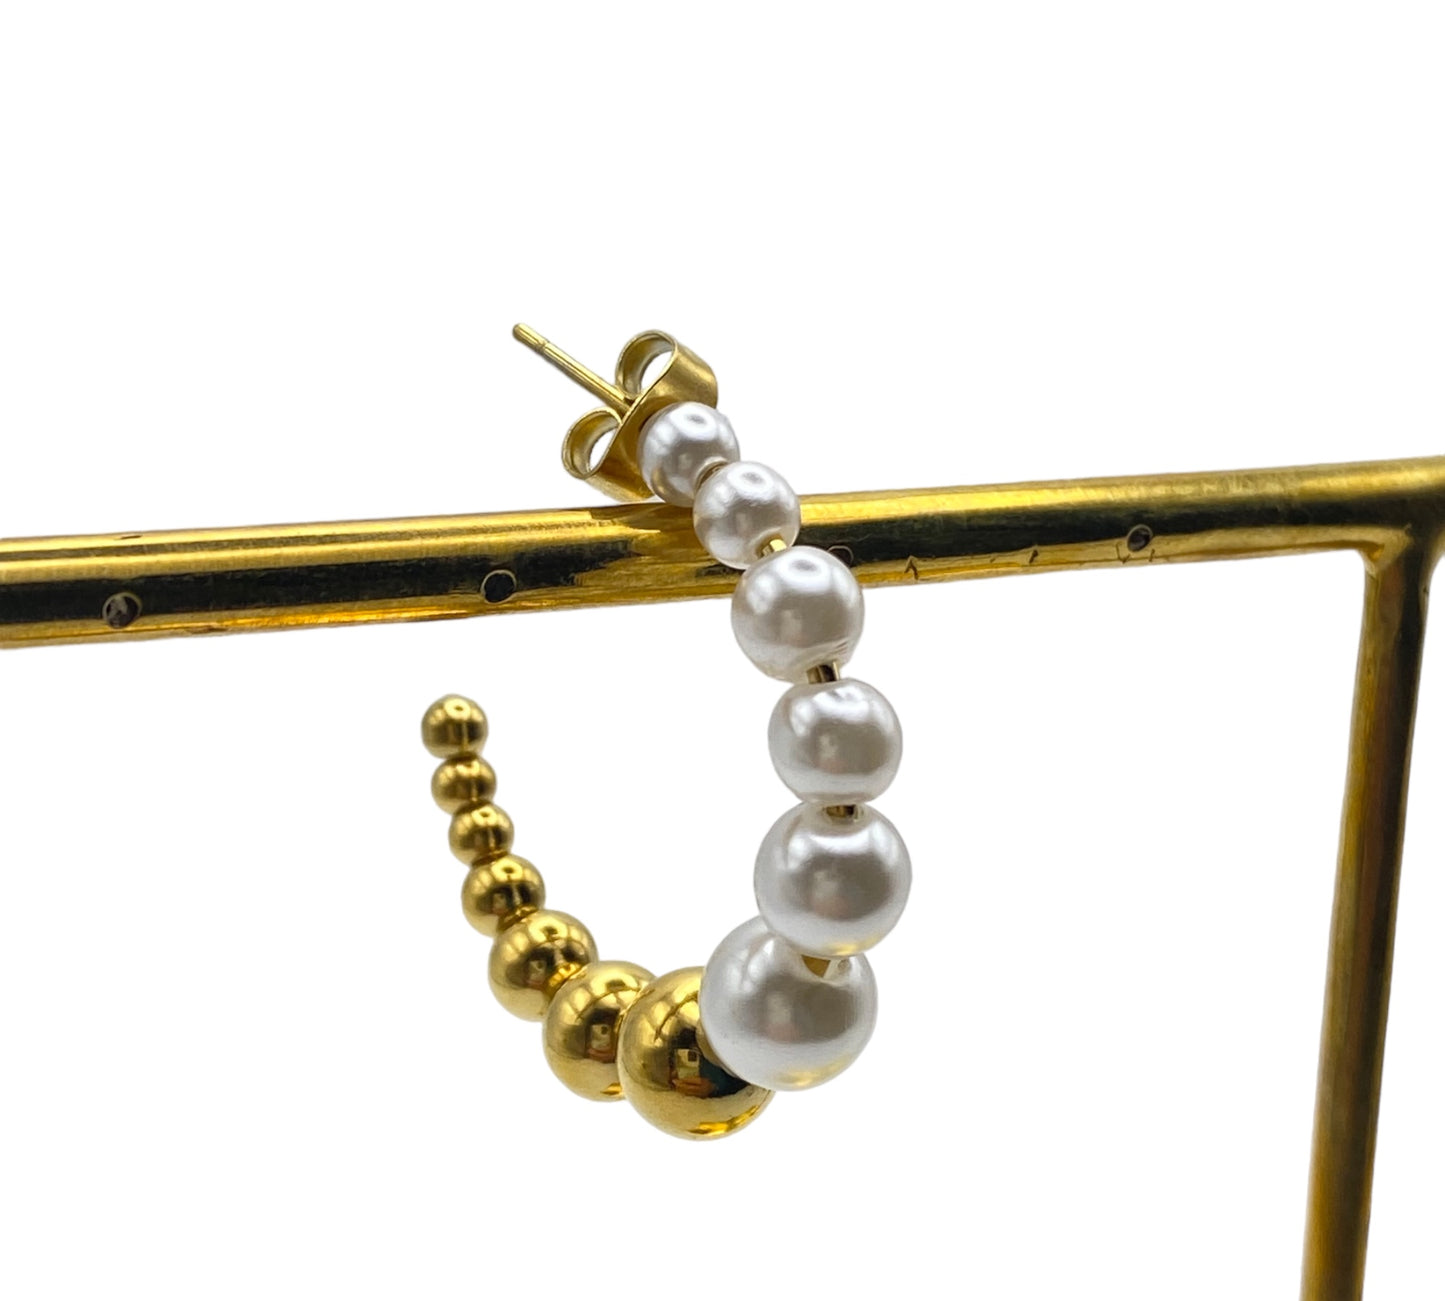 "SEYDA" gold plated half hoop earrings with pearl and metal beads